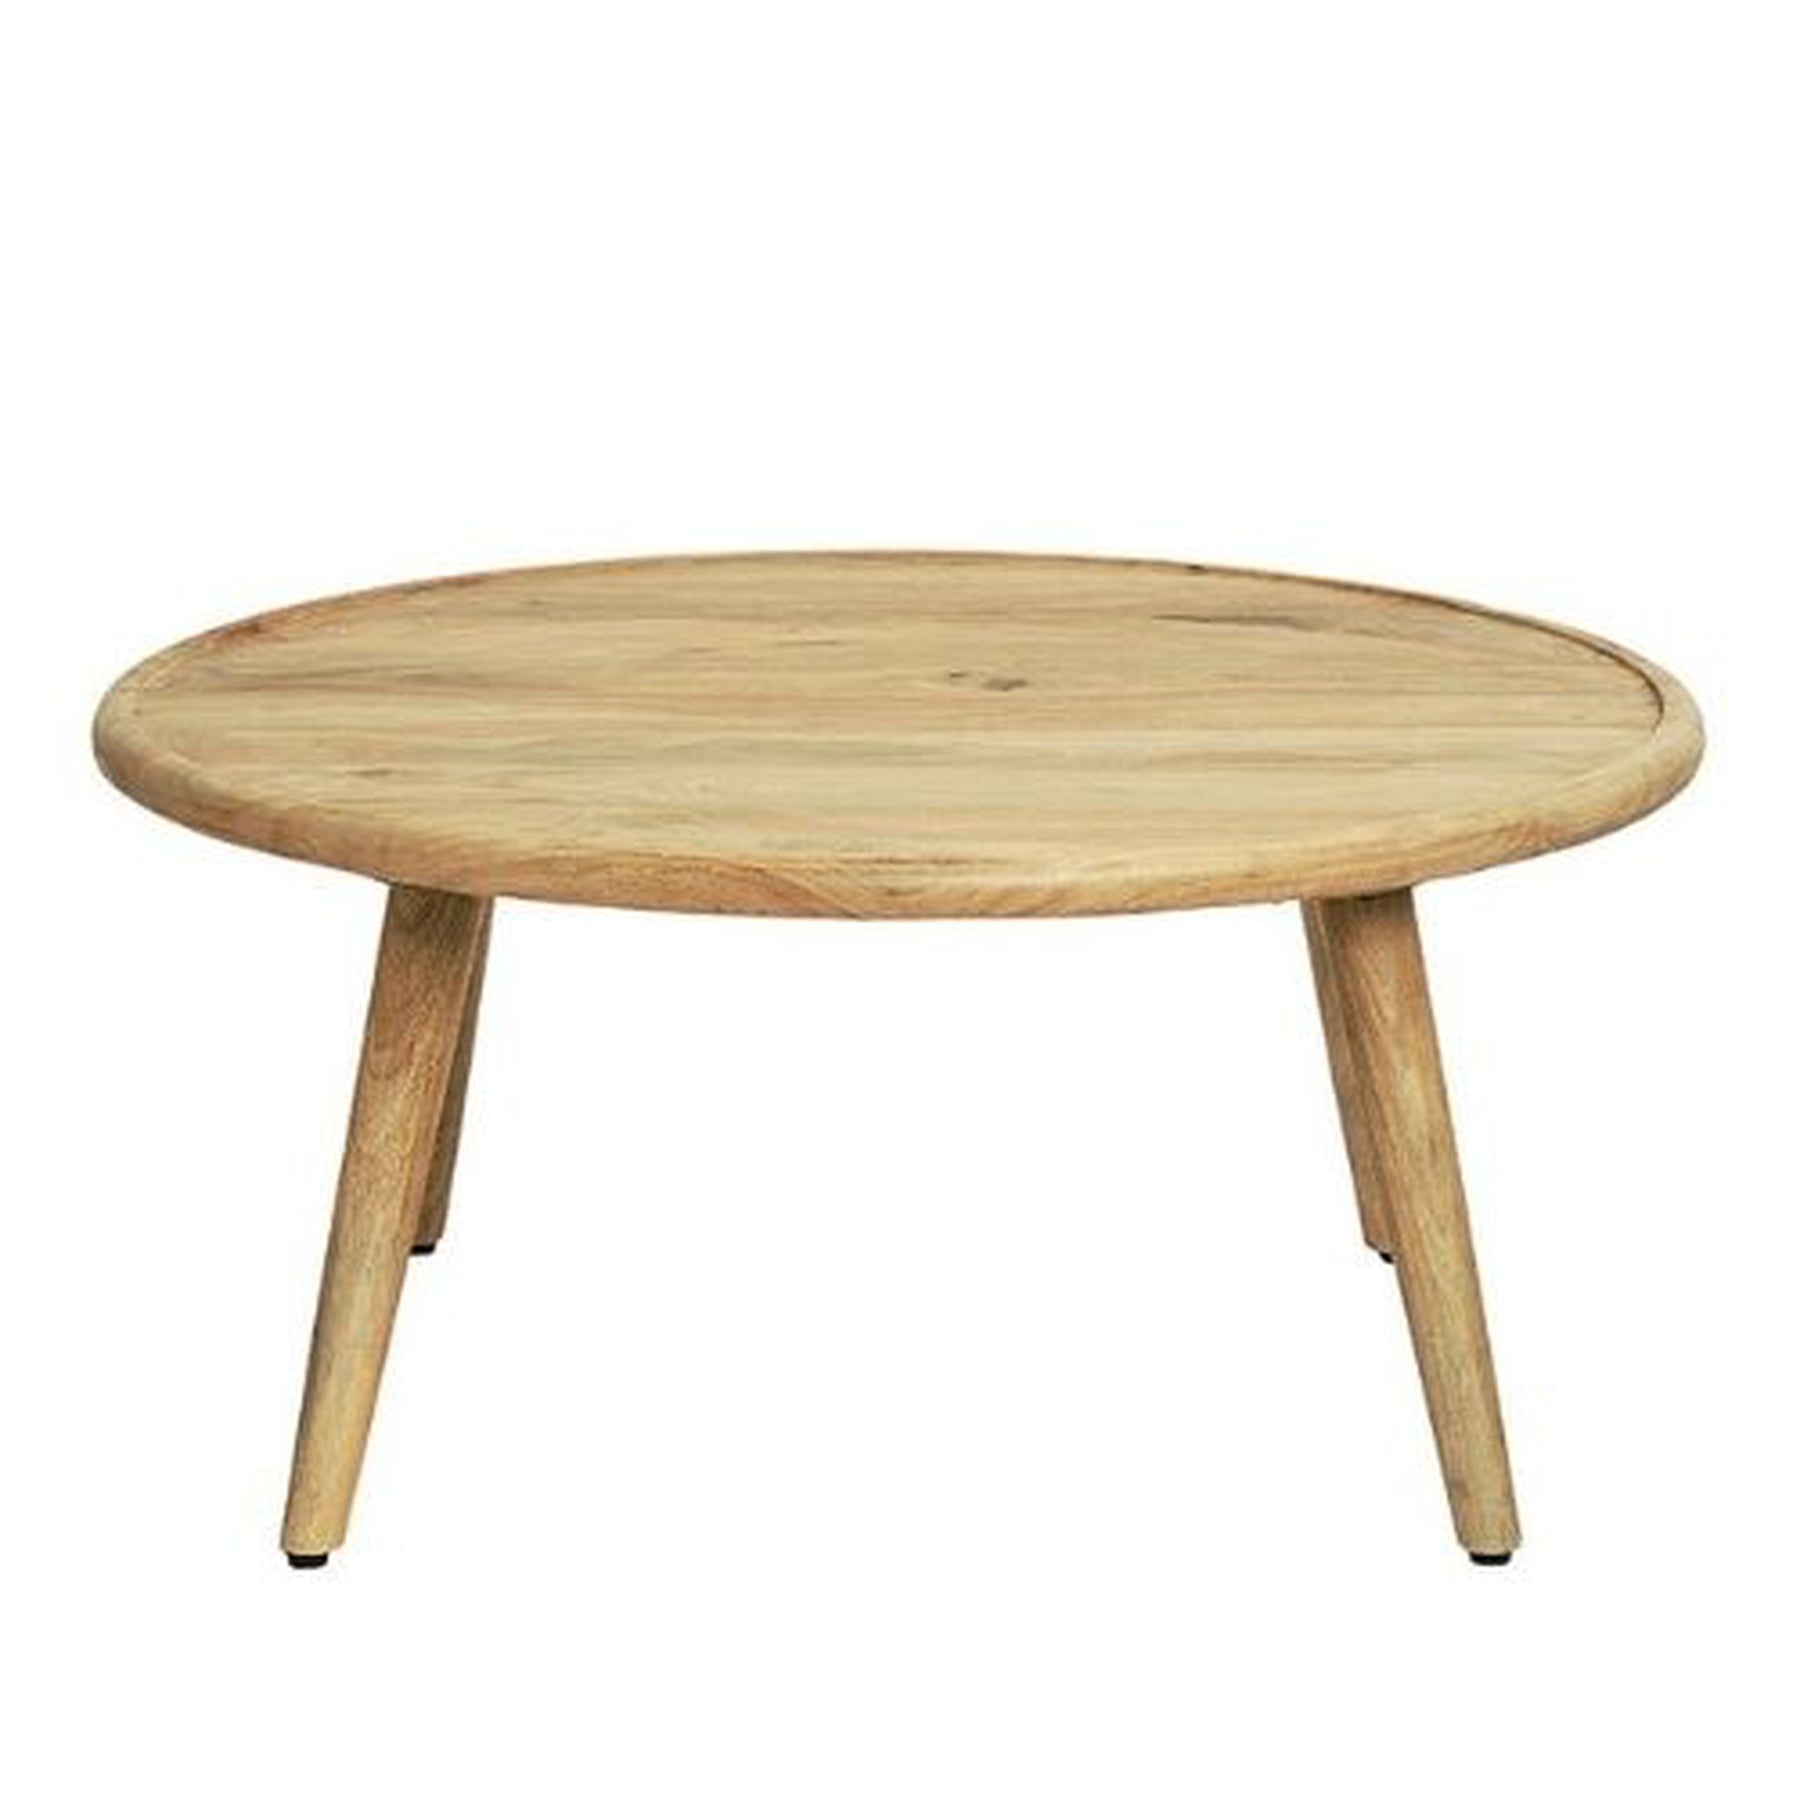 Grande table basse ronde en bois massif rétro